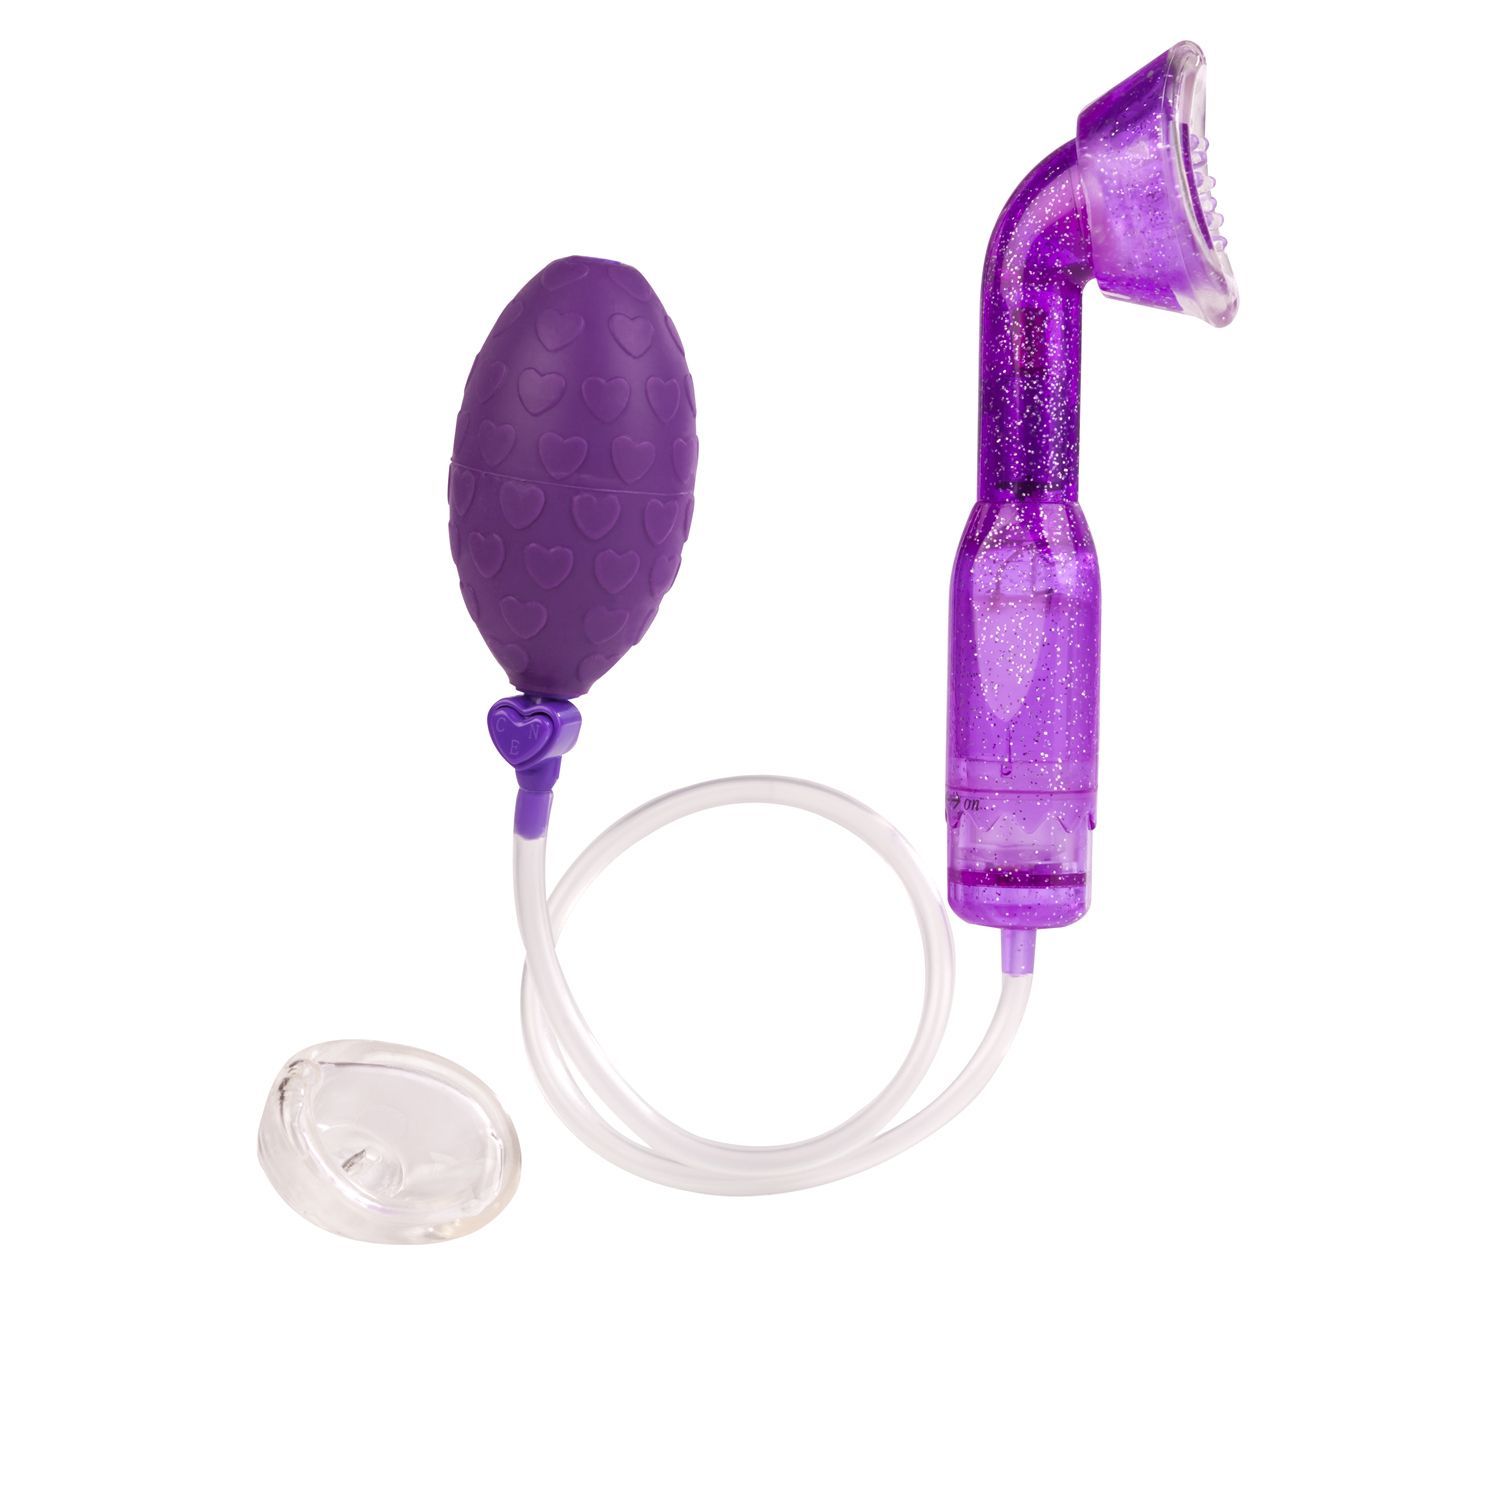 home made clitoris pumping devices